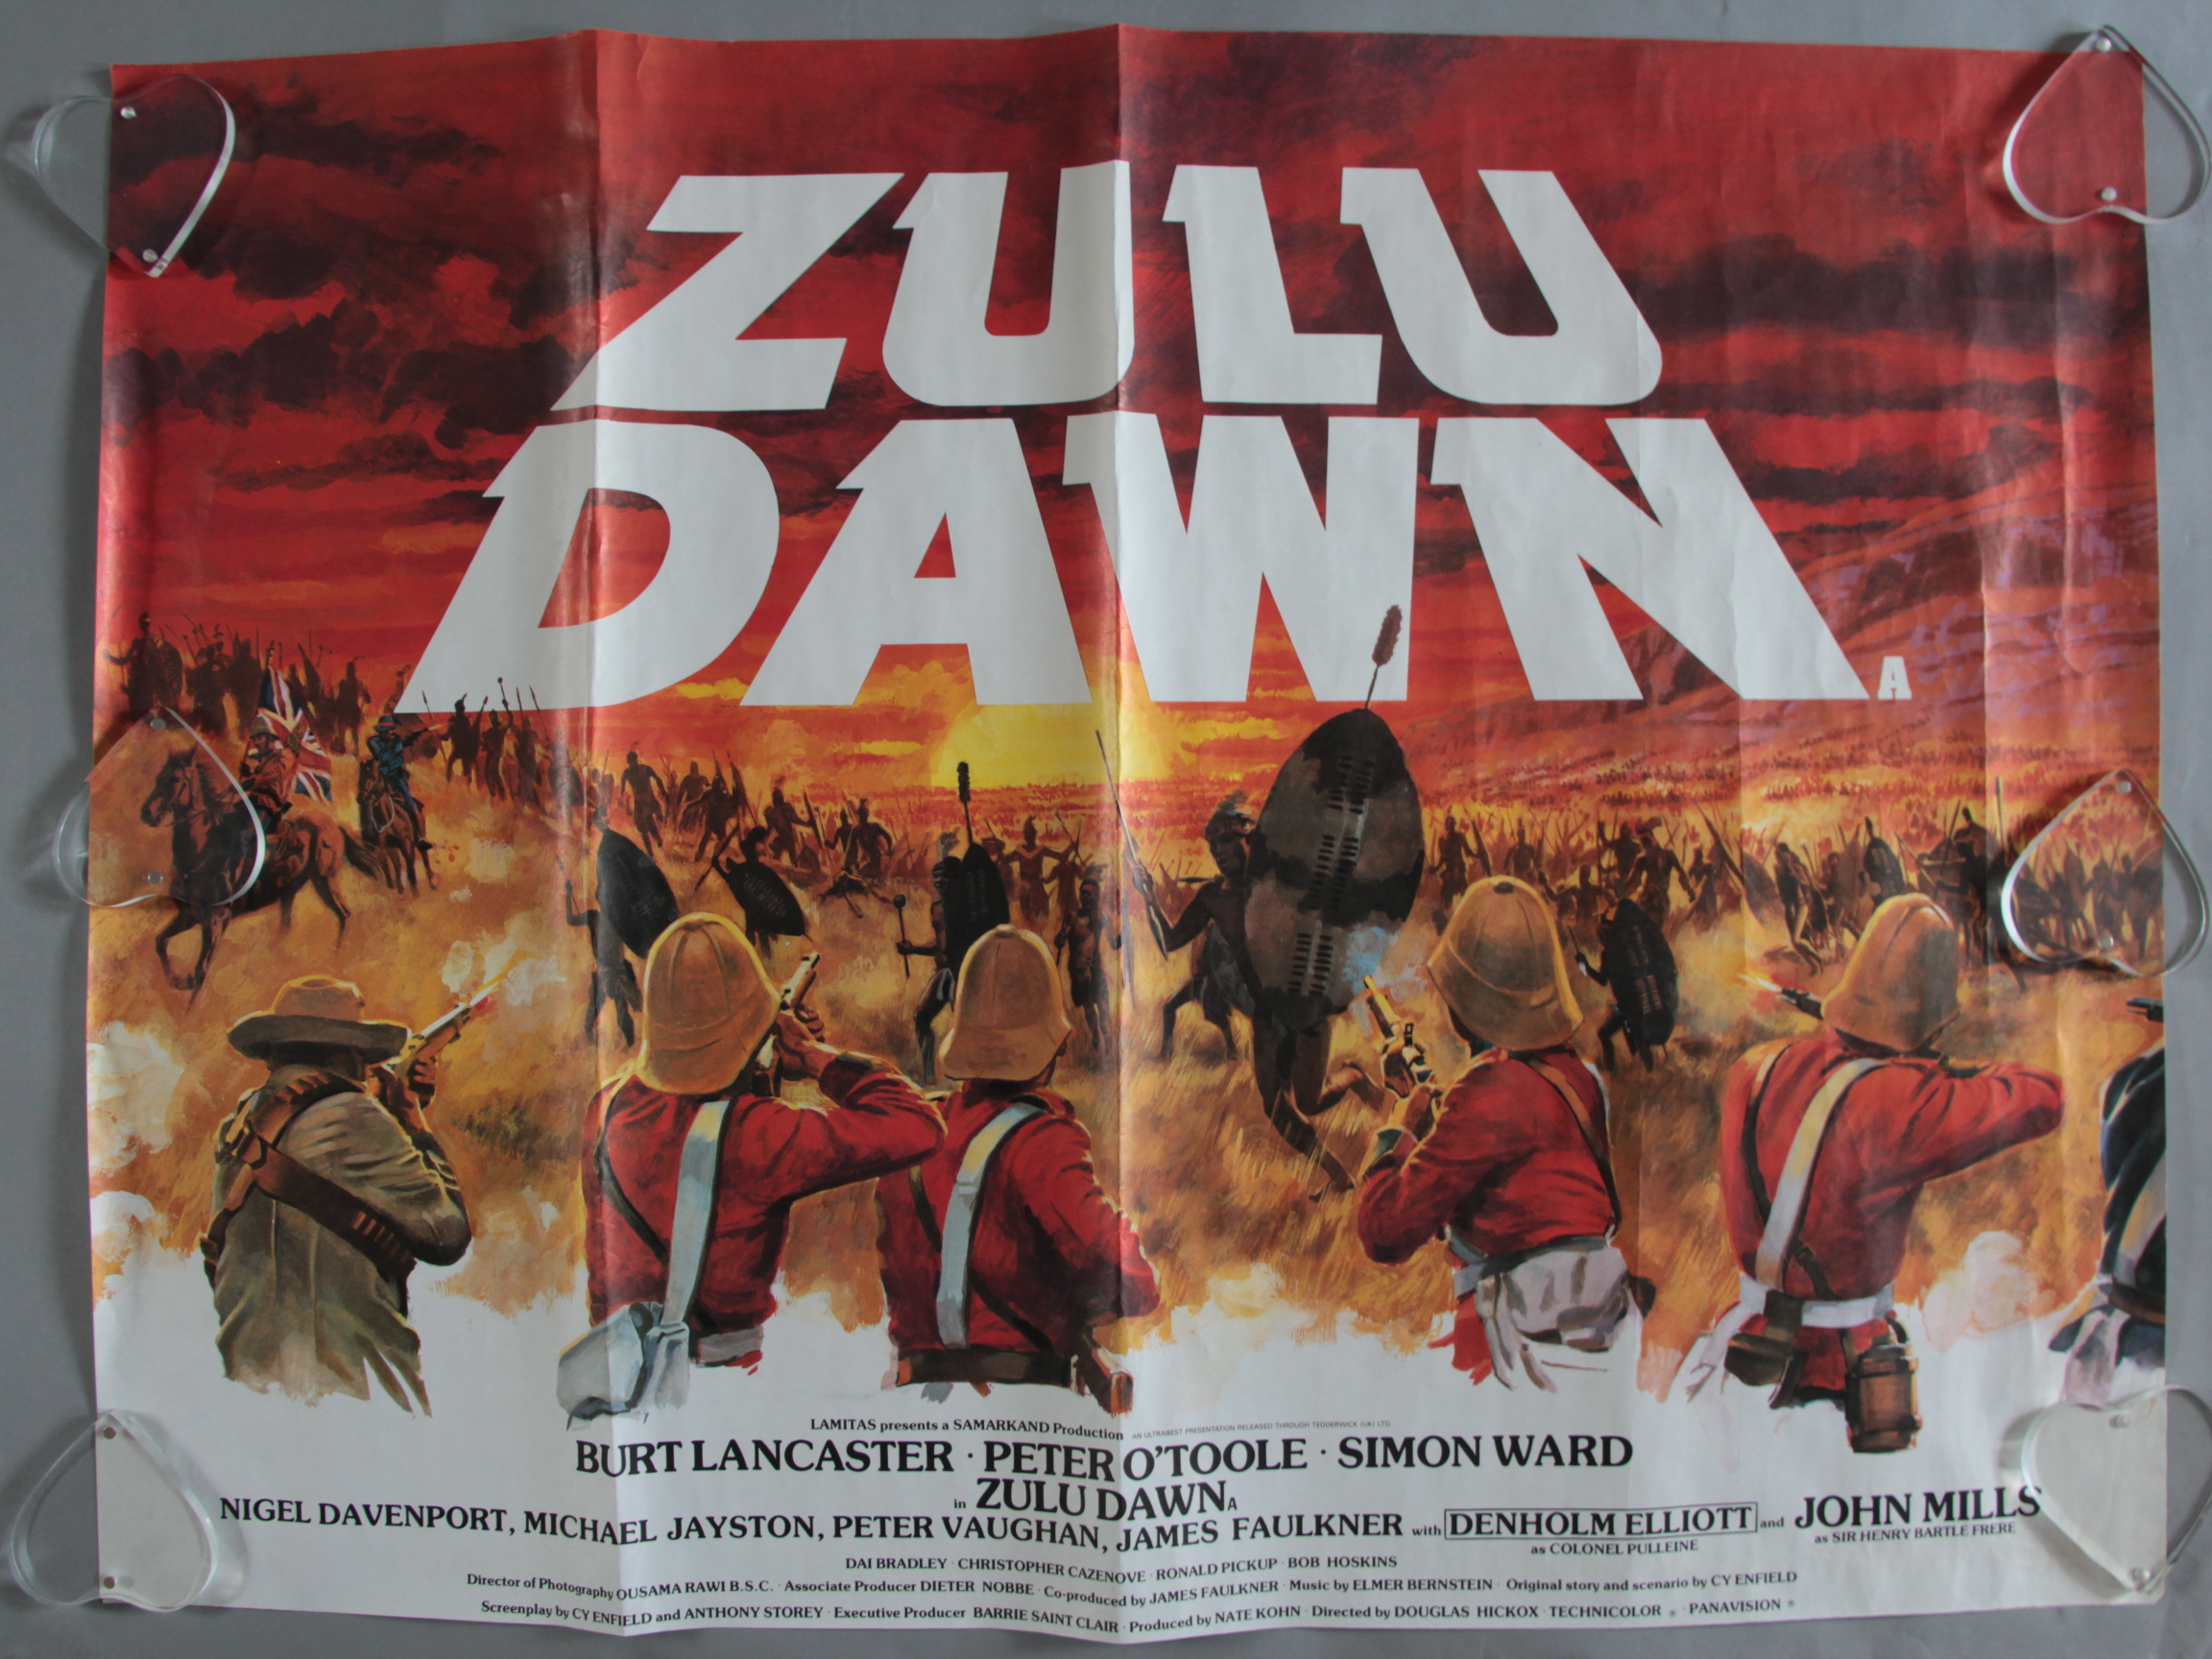 Ten vintage British Quad film posters including Zulu Dawn, Straw Dogs / Death Weekend (double-bill),